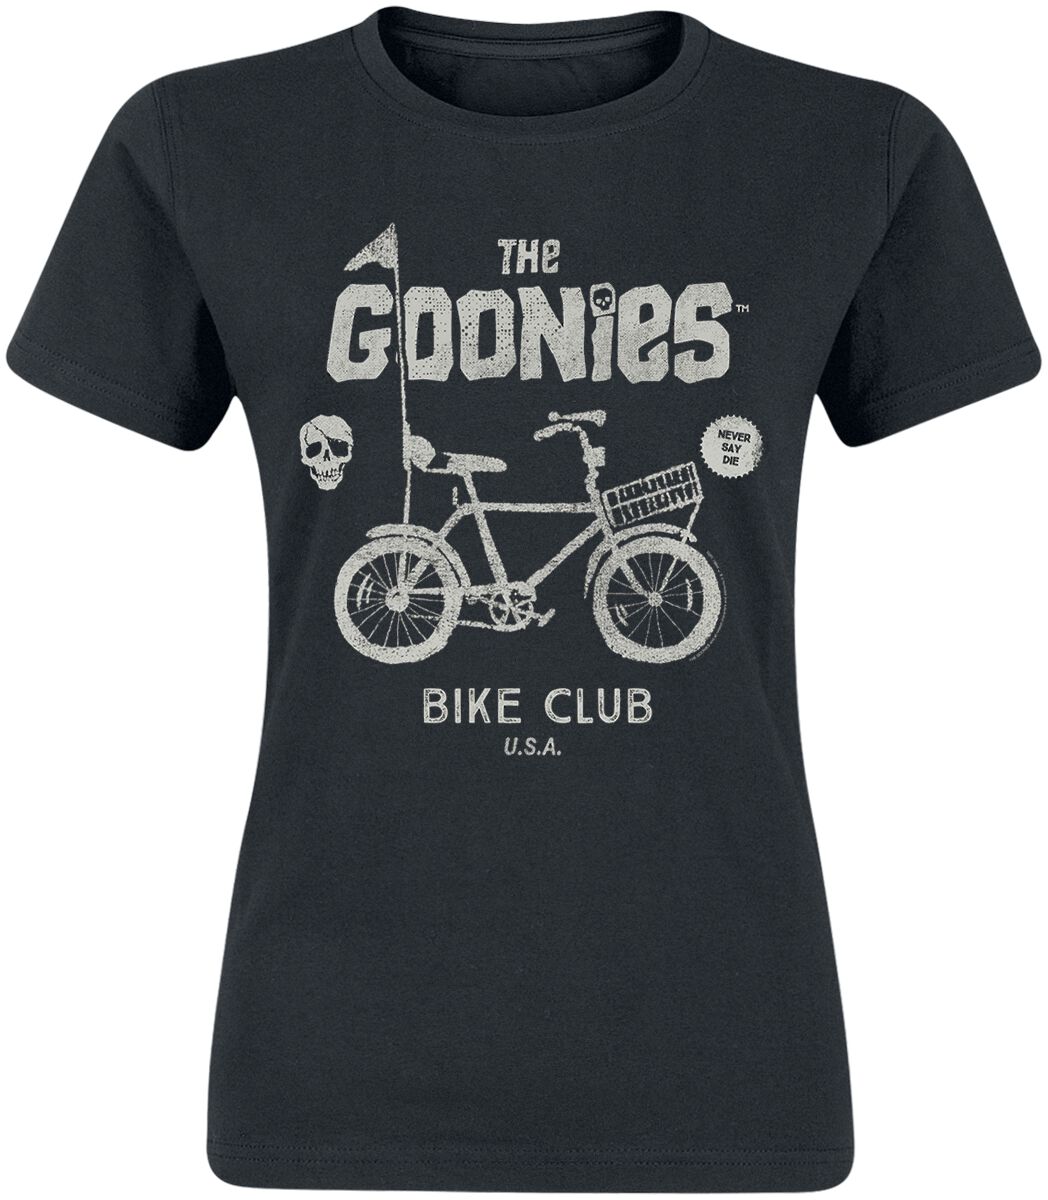 The Goonies Bike Club T-Shirt black